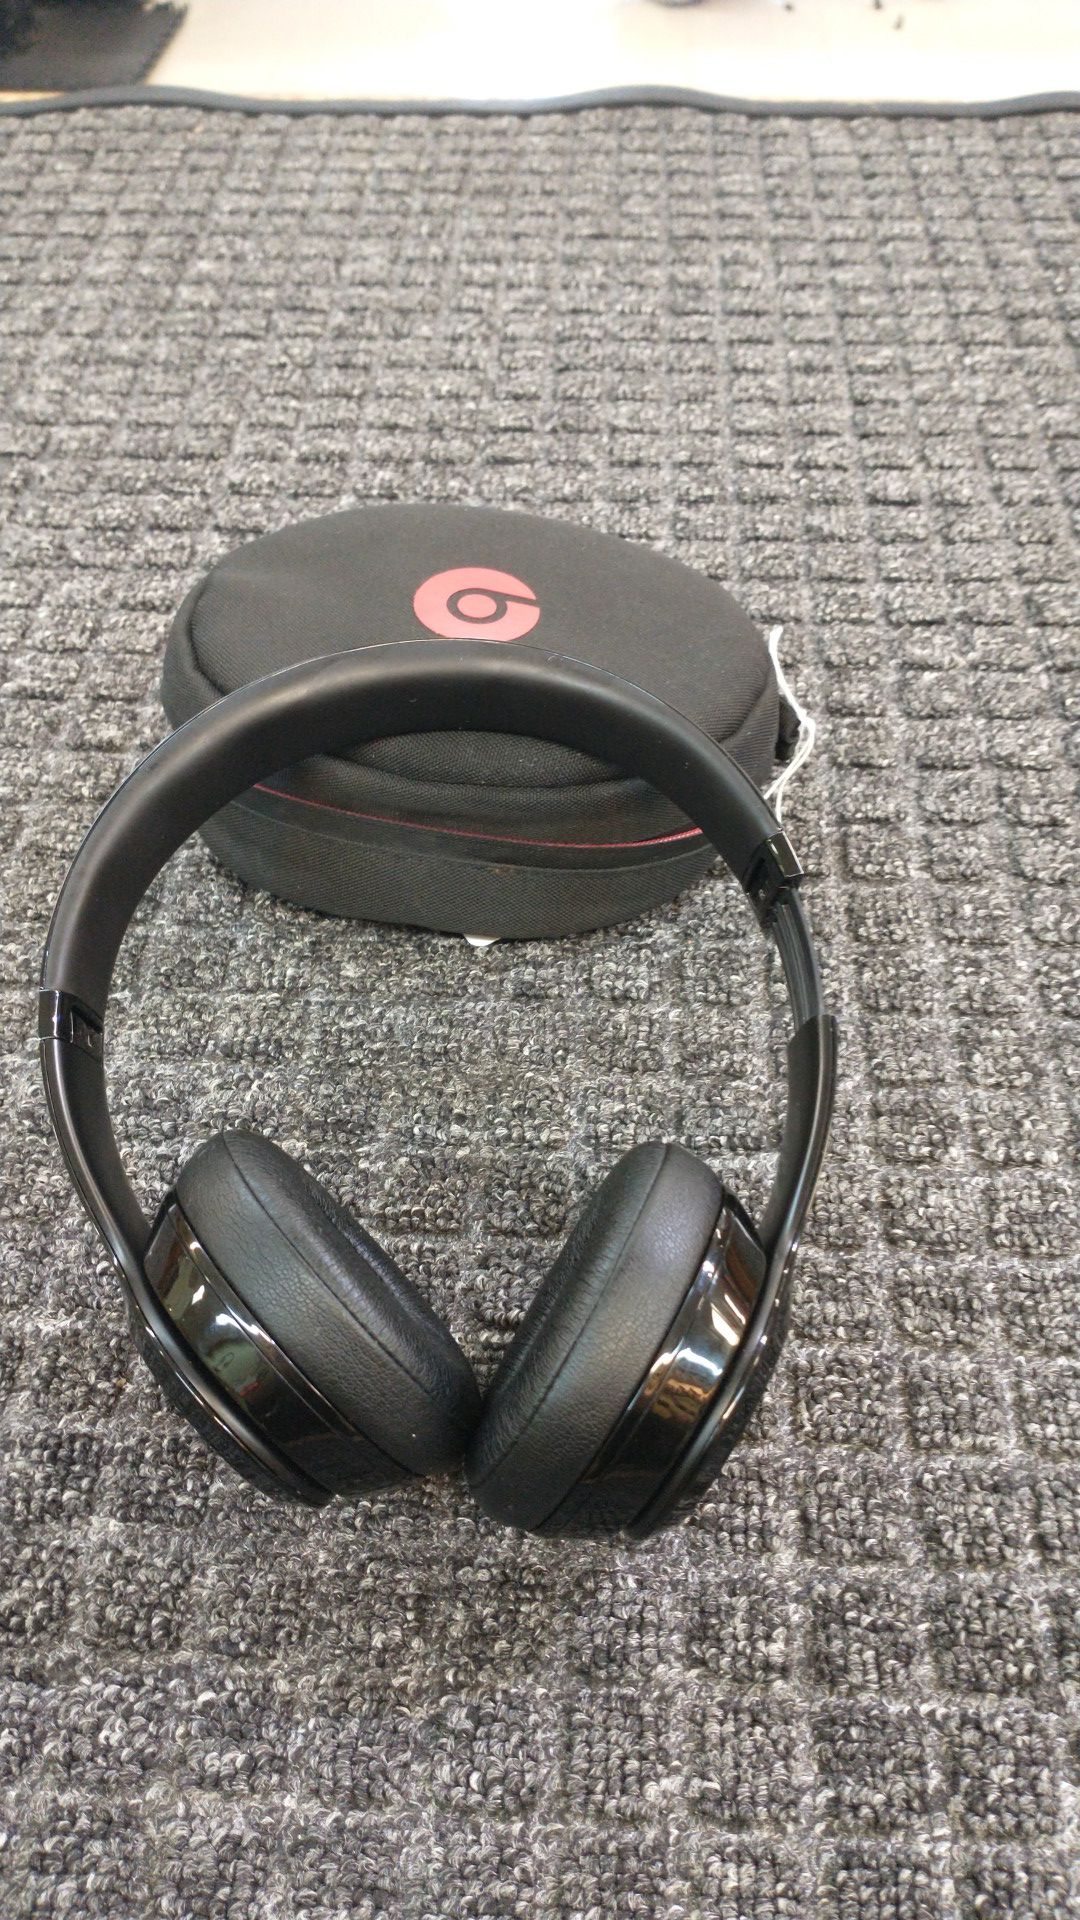 Beats Wireless headphones with case